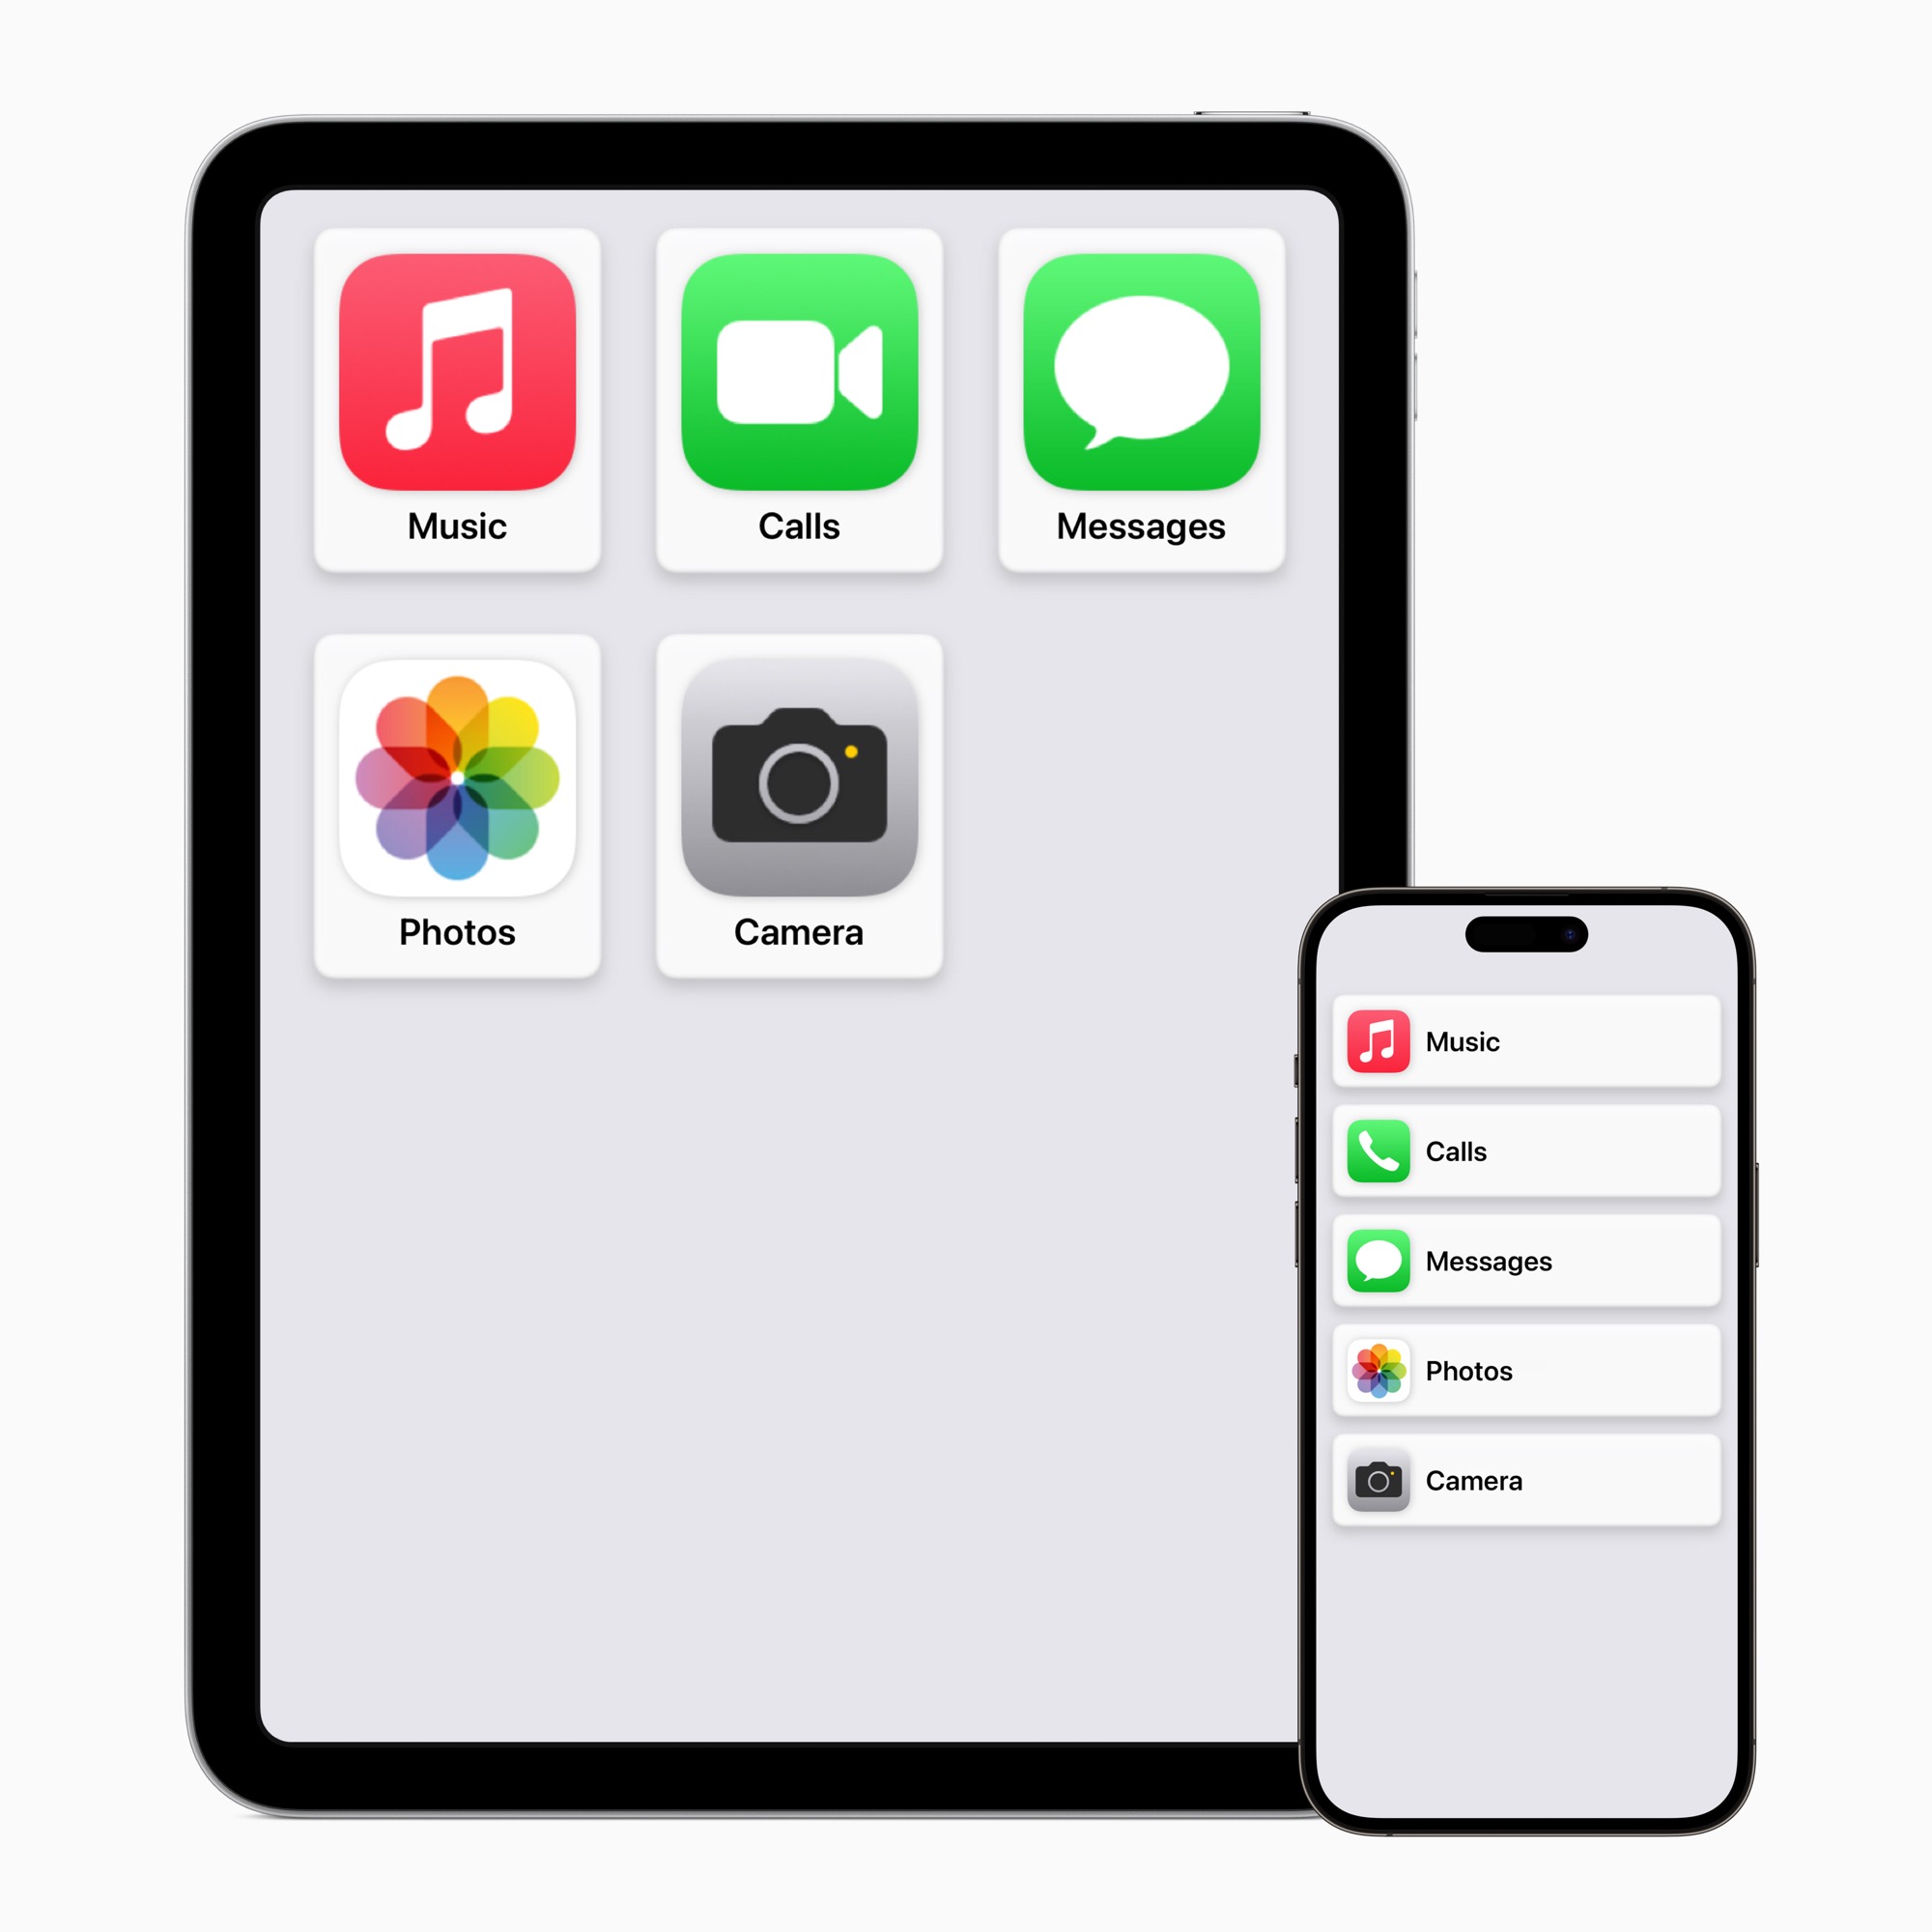 Zdjęcie okładkowe wpisu Apple-accessibility-Assistive-Access-iPad-iPhone-14-Pro-Max-Home-Screen